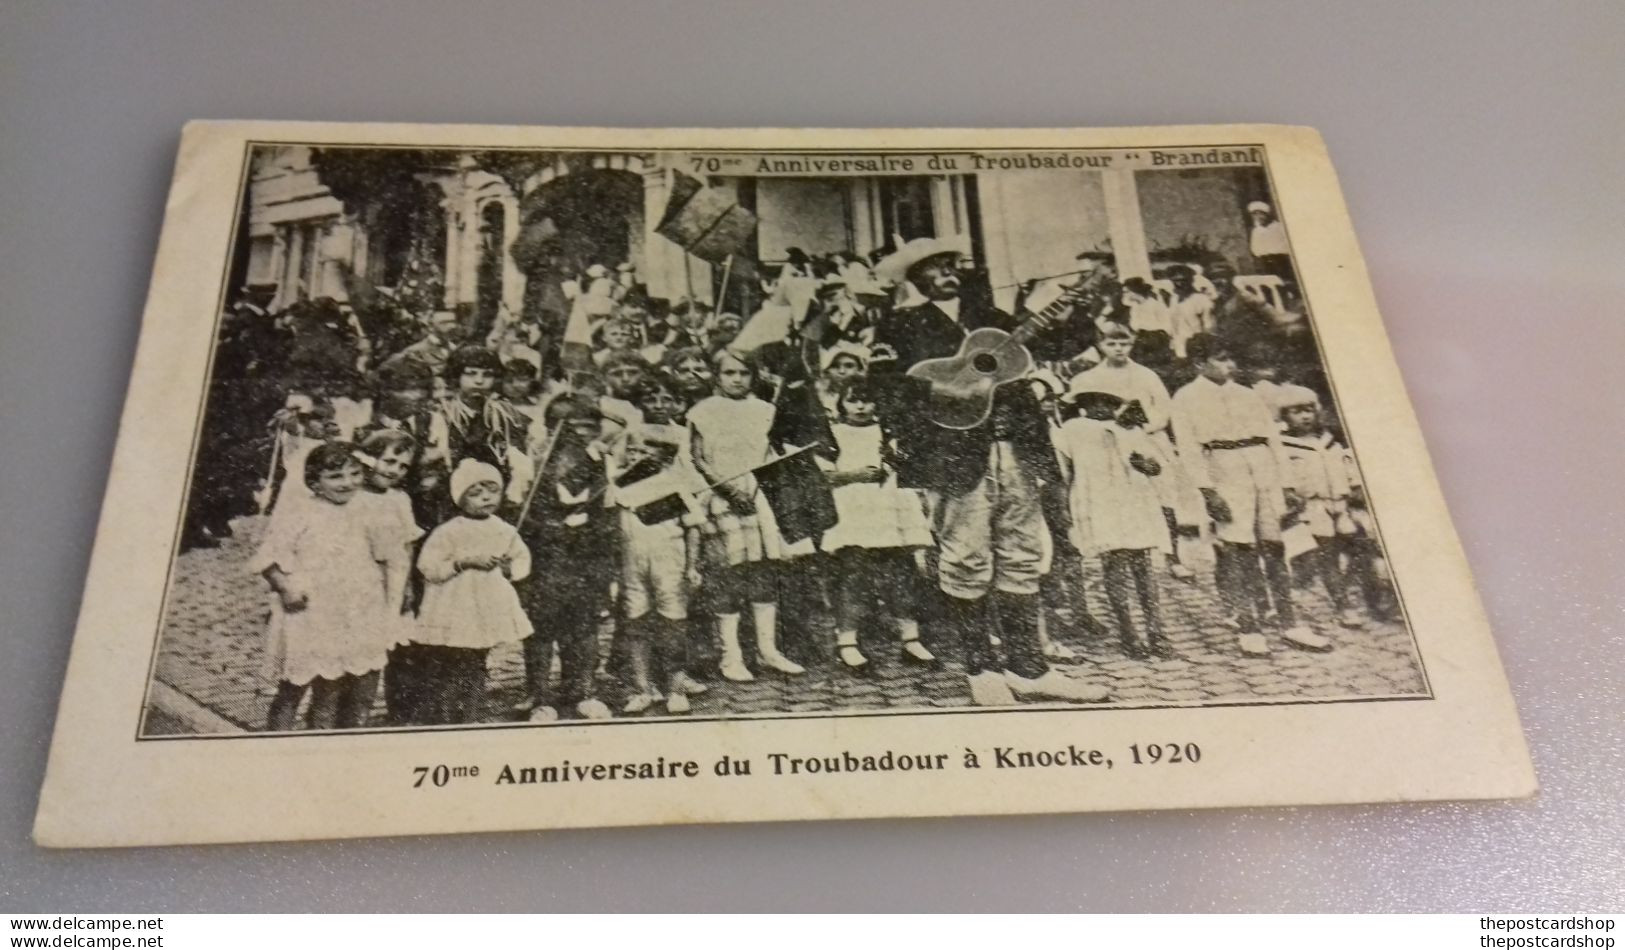 Belgique - Knocke - 70me Anniversaire Du Troubadour à Knocke 1920 Belgique - Knocke - 70me Anniversaire Du Trouba UNUSED - Knokke